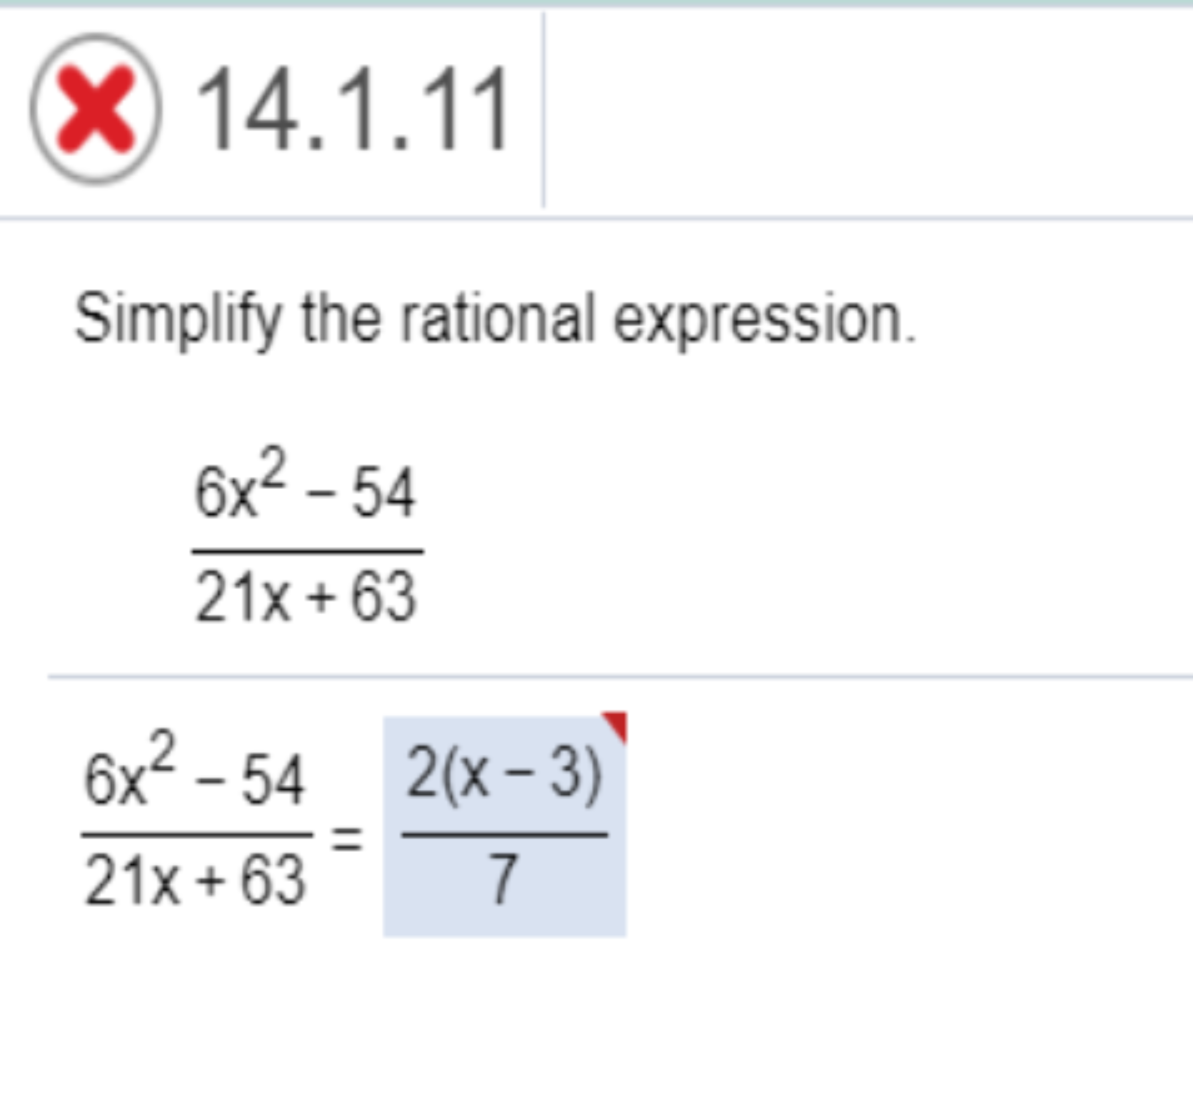 X14.1.11
Simplify the rational expression
6x2-54
21x+63
6x2-54 2(x-3)
21X+63
7
